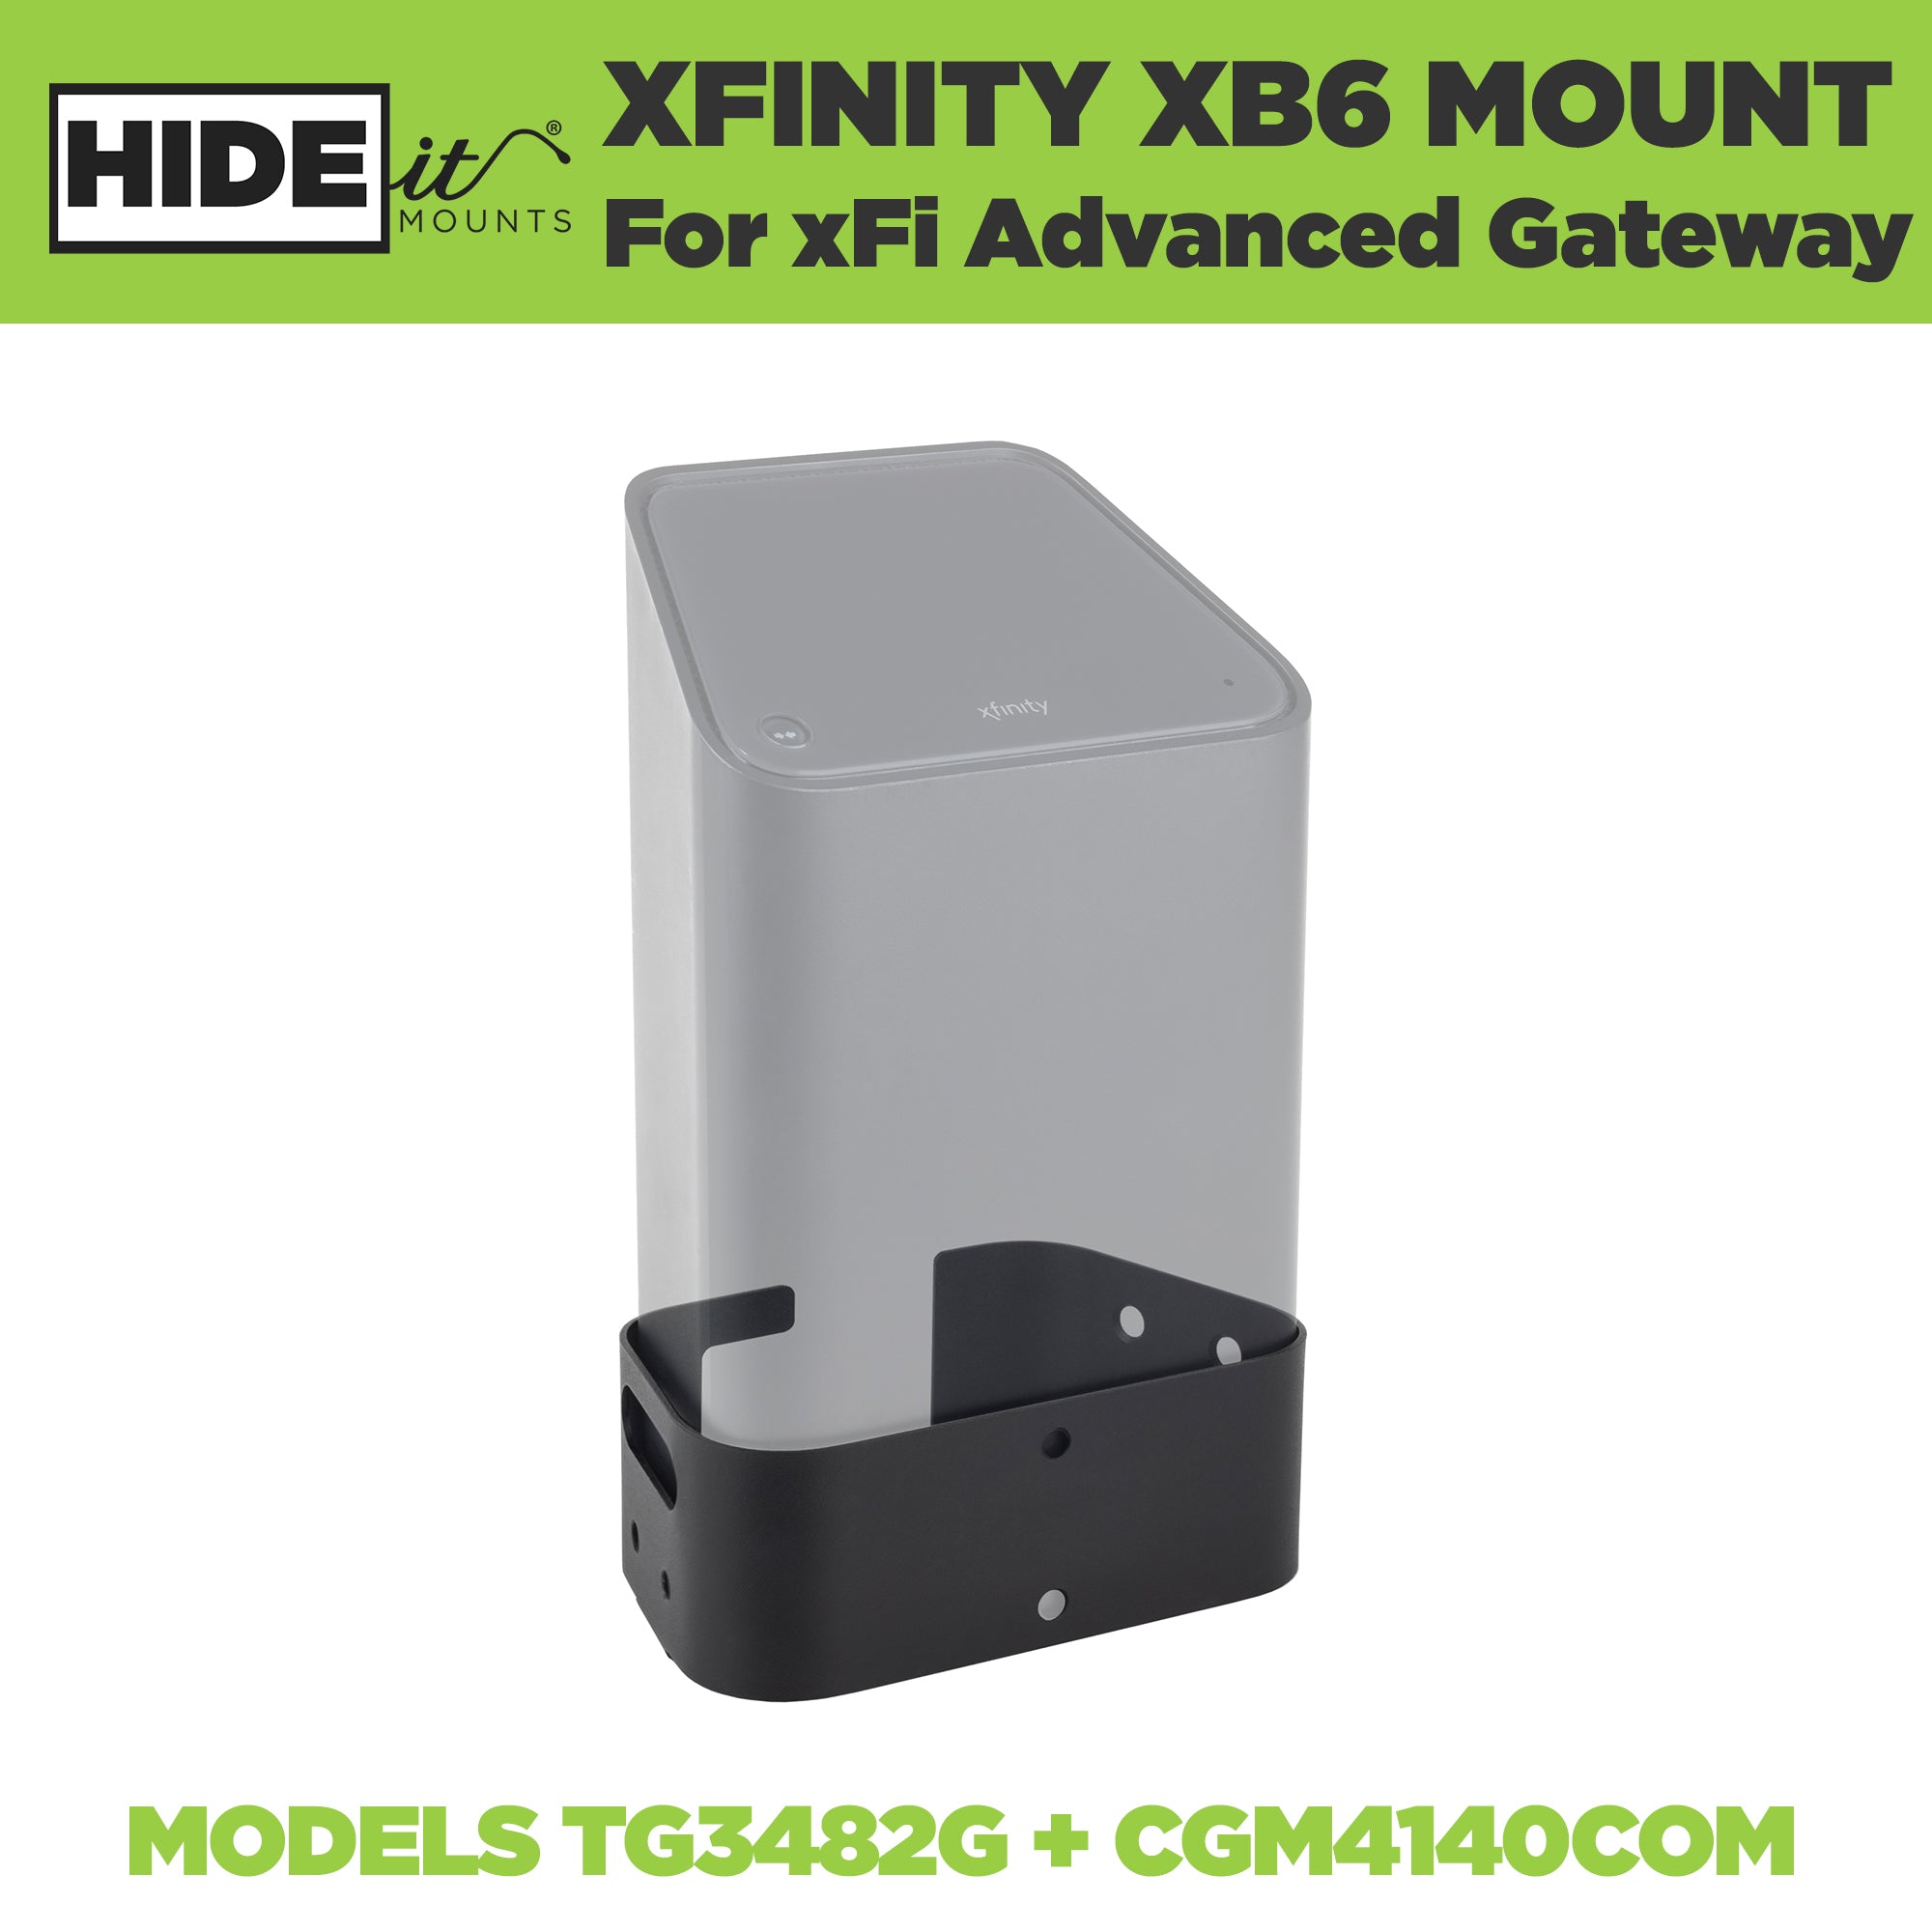 Xfinity WiFi Router Mount designed by HIDEit Mounts for the Xfinity XFi Advanced Gateway Models TG3482G and CGM4140COM